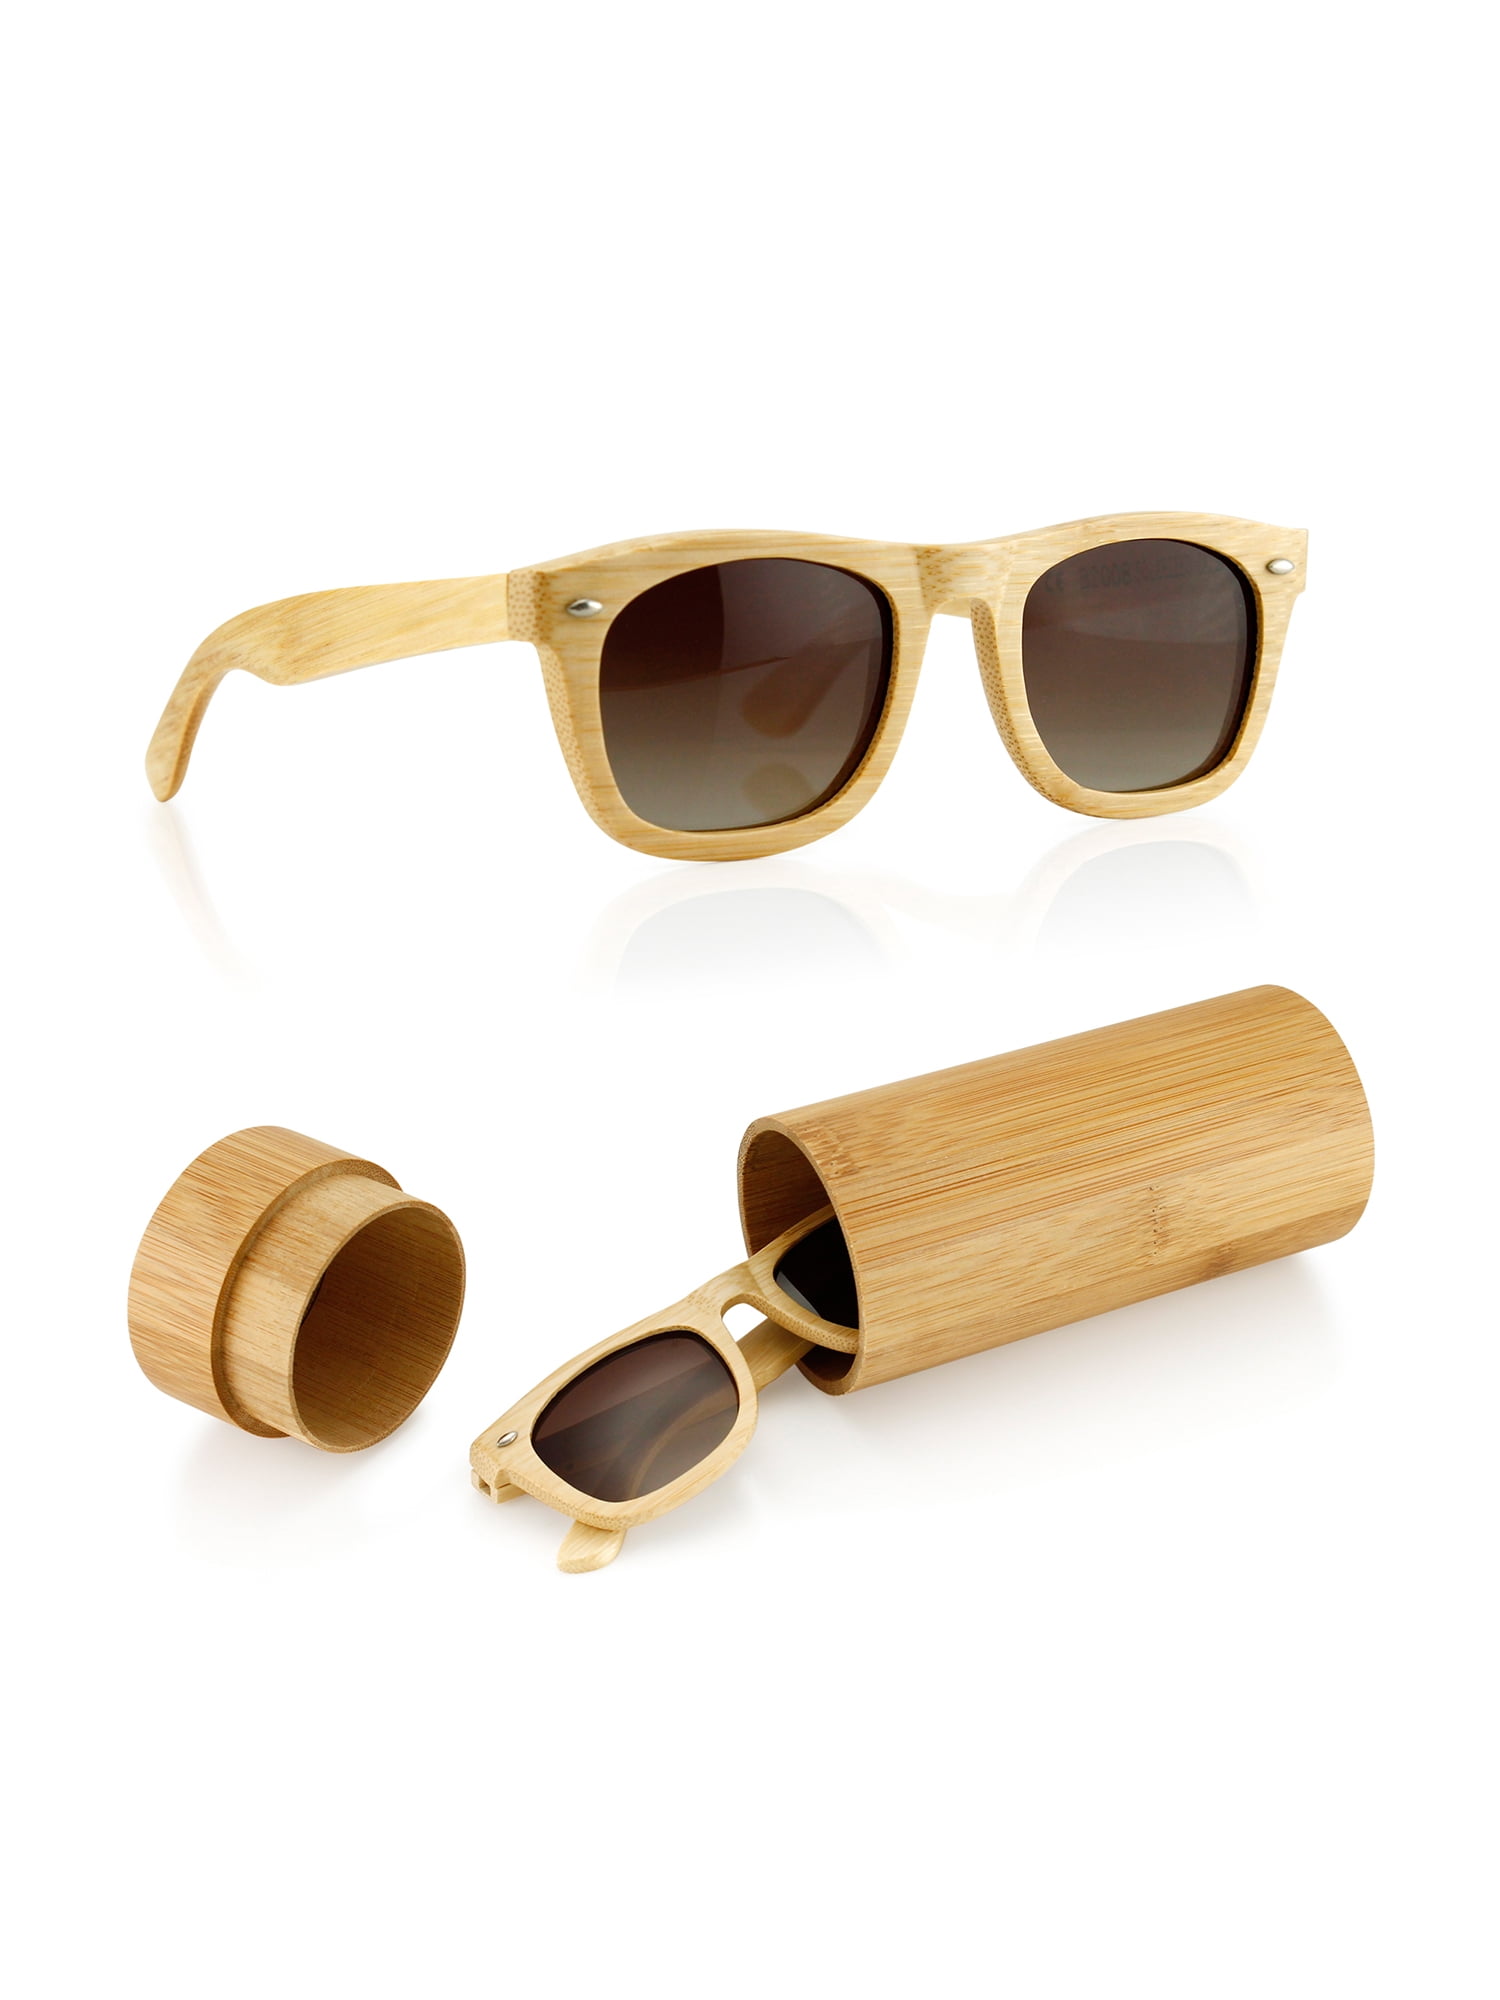 Vintage Men Women Bamboo Sunglasses Polarized Wooden frame glasses Wood case 